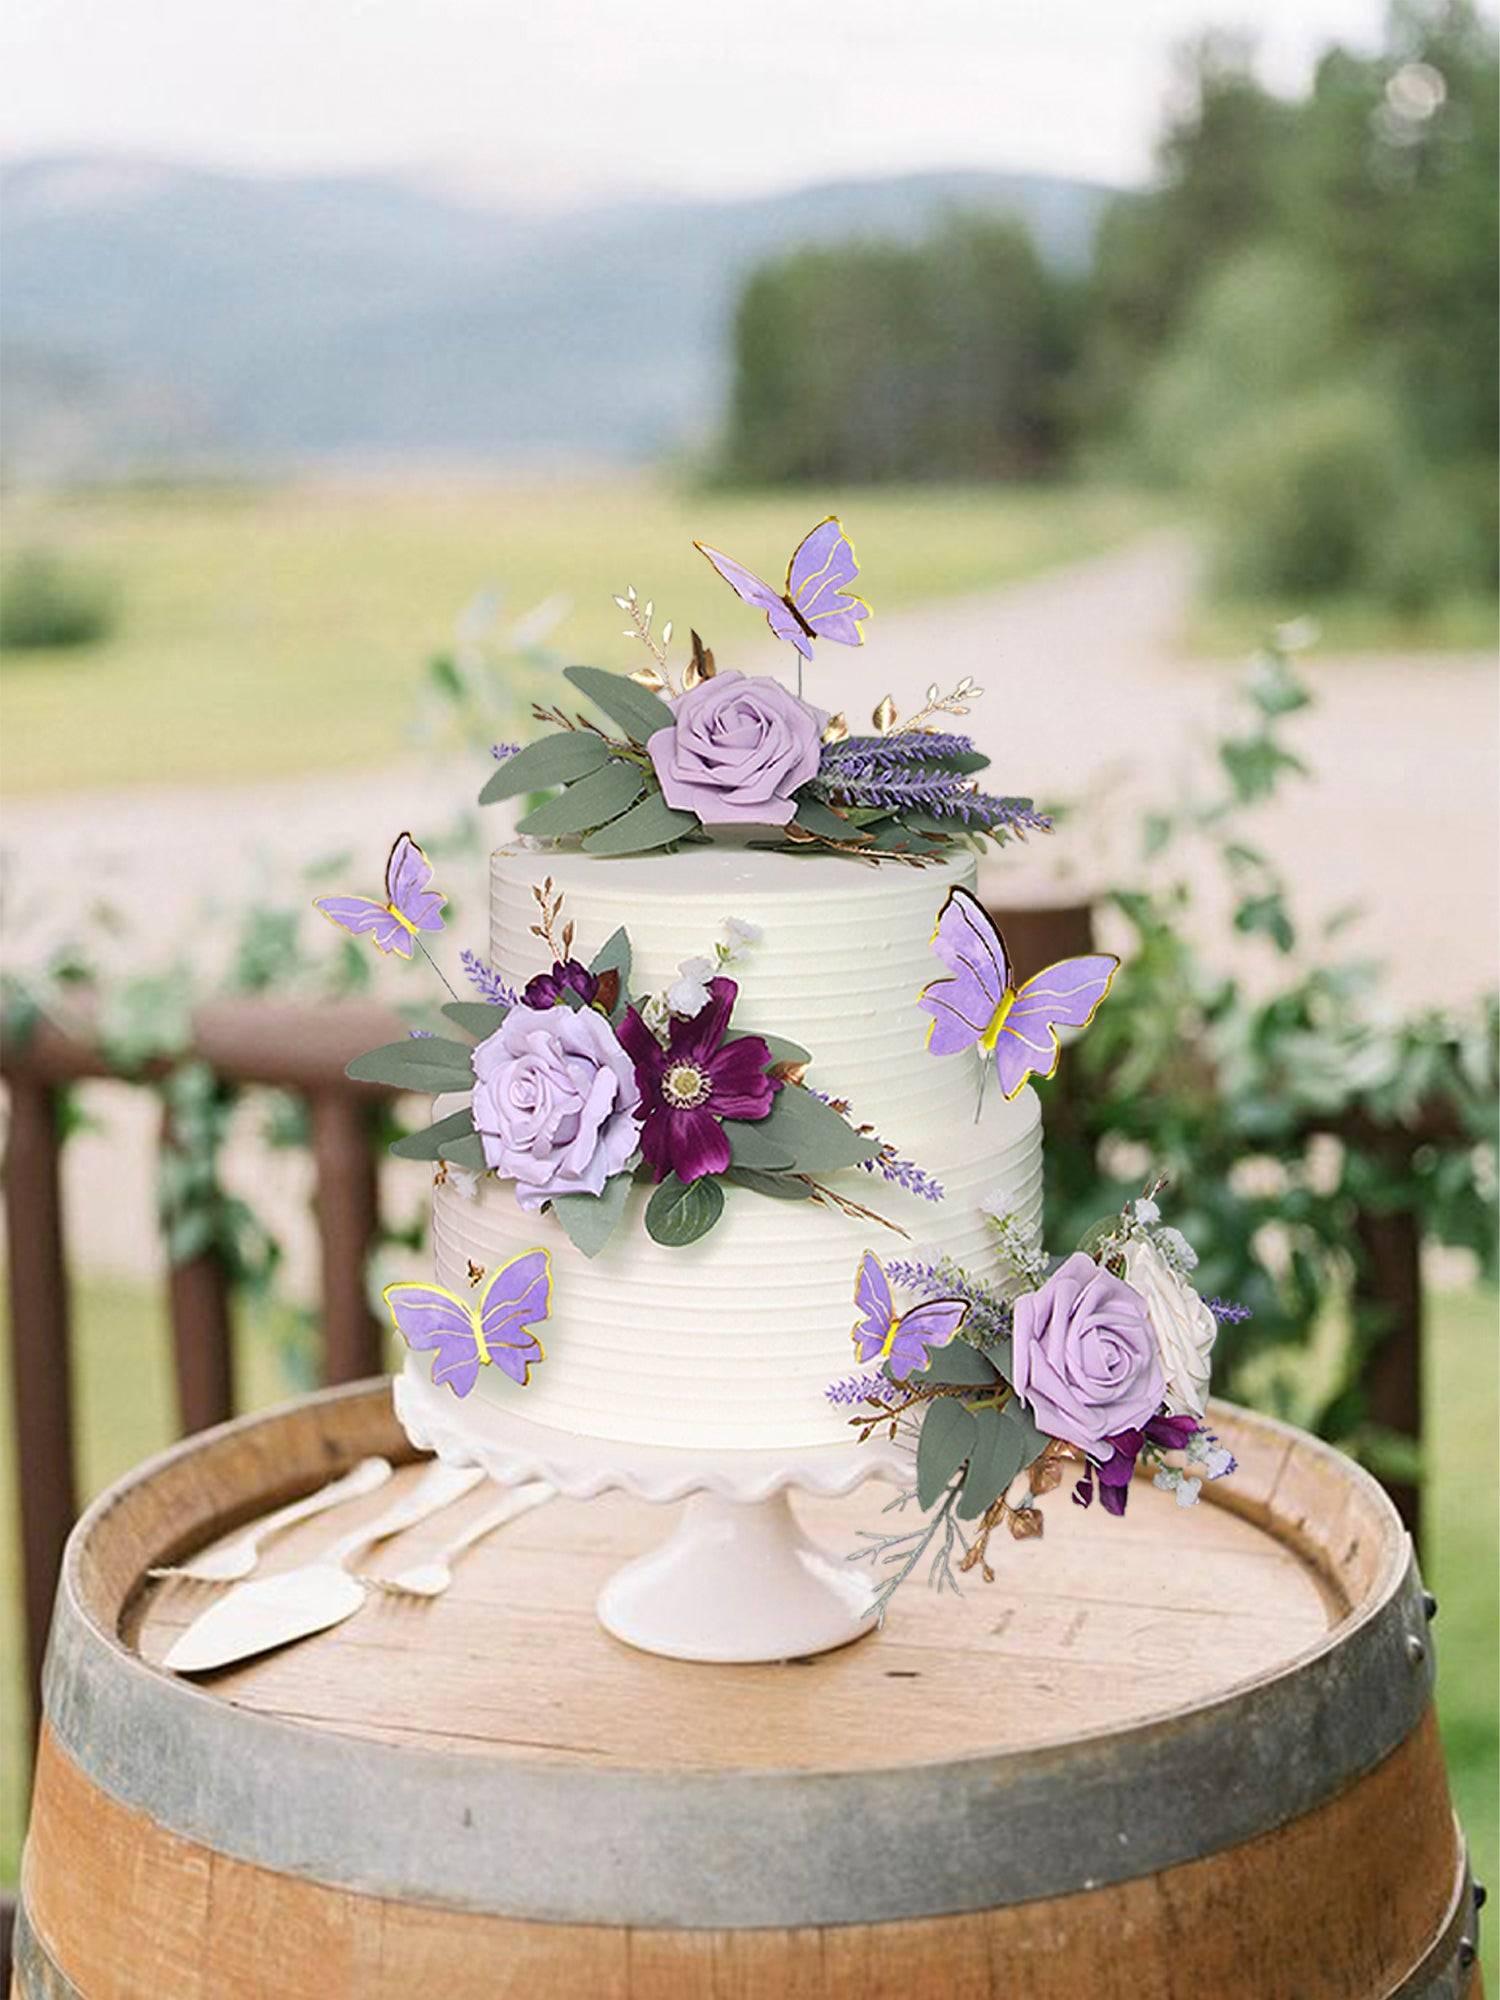 Pastel Purple Flowers & Butterfly Cake Decorating Set - Rinlong Flower